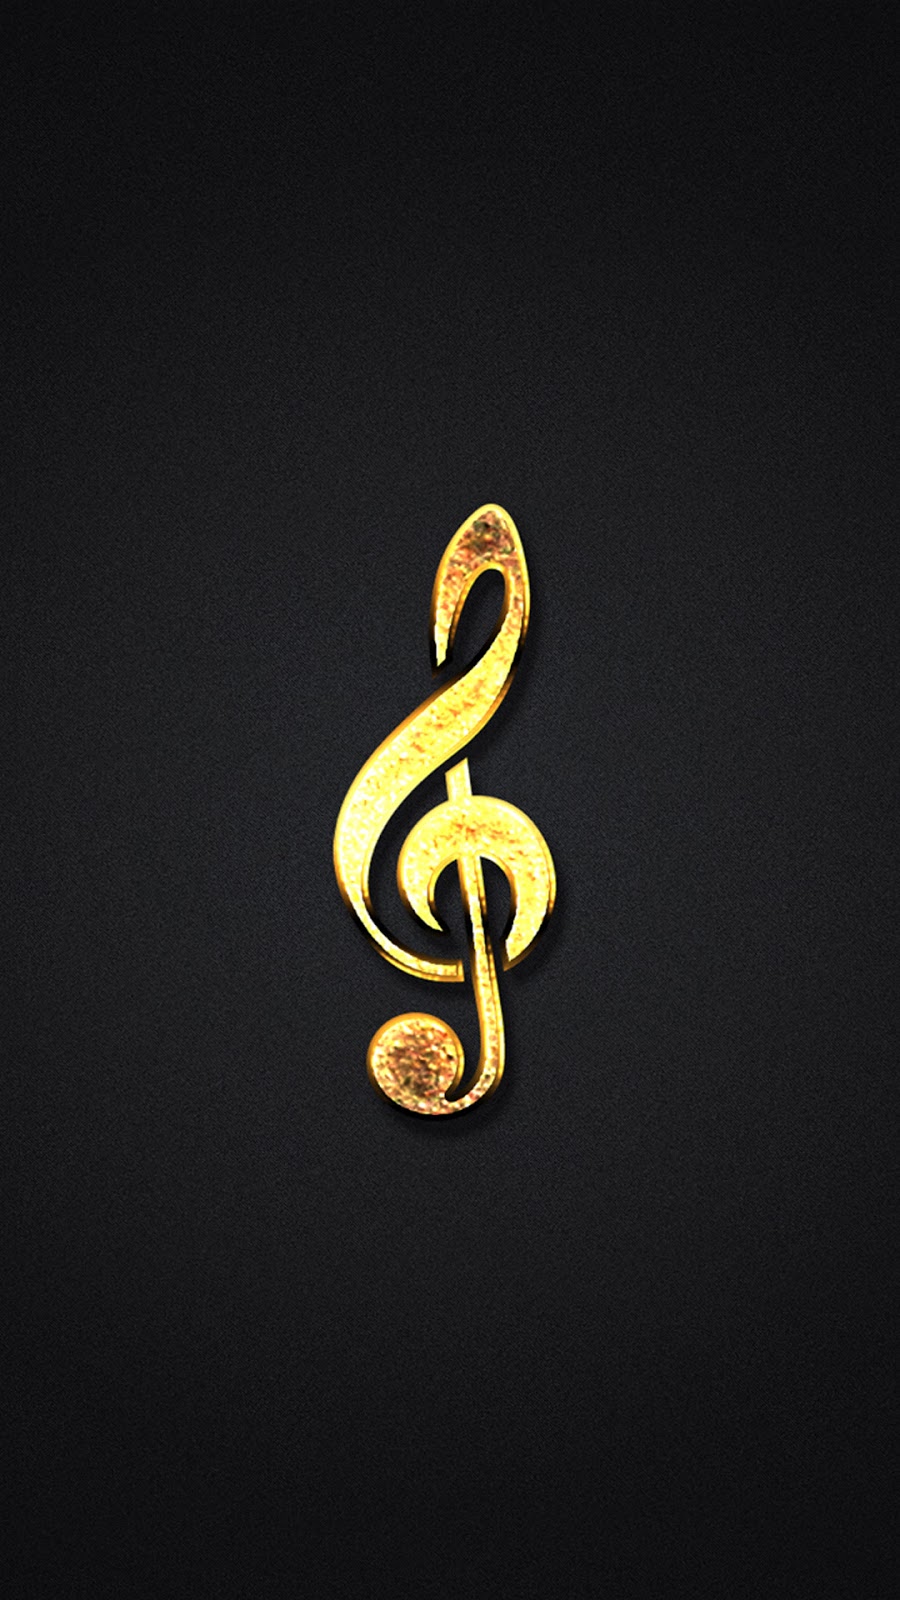 musik iphone wallpaper,gelb,schriftart,schlange,metall,symbol